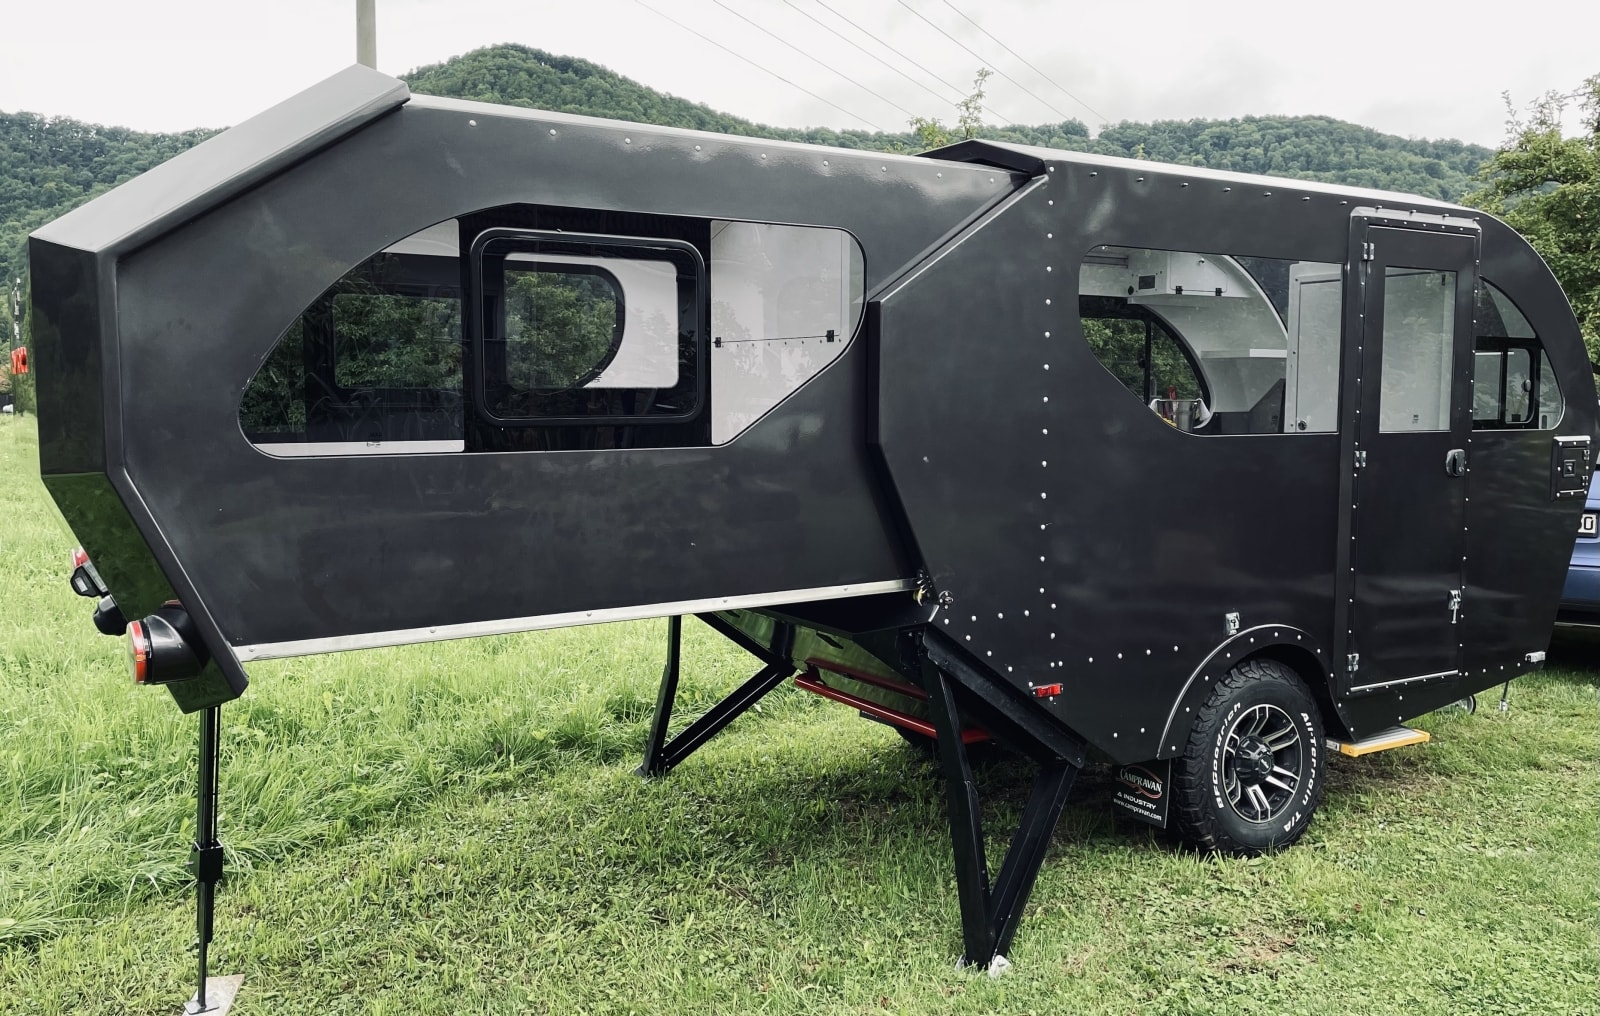 Campravan Raptor XC Fits an Entire Mobile Home Into a Rugged Teardrop  Trailer - autoevolution